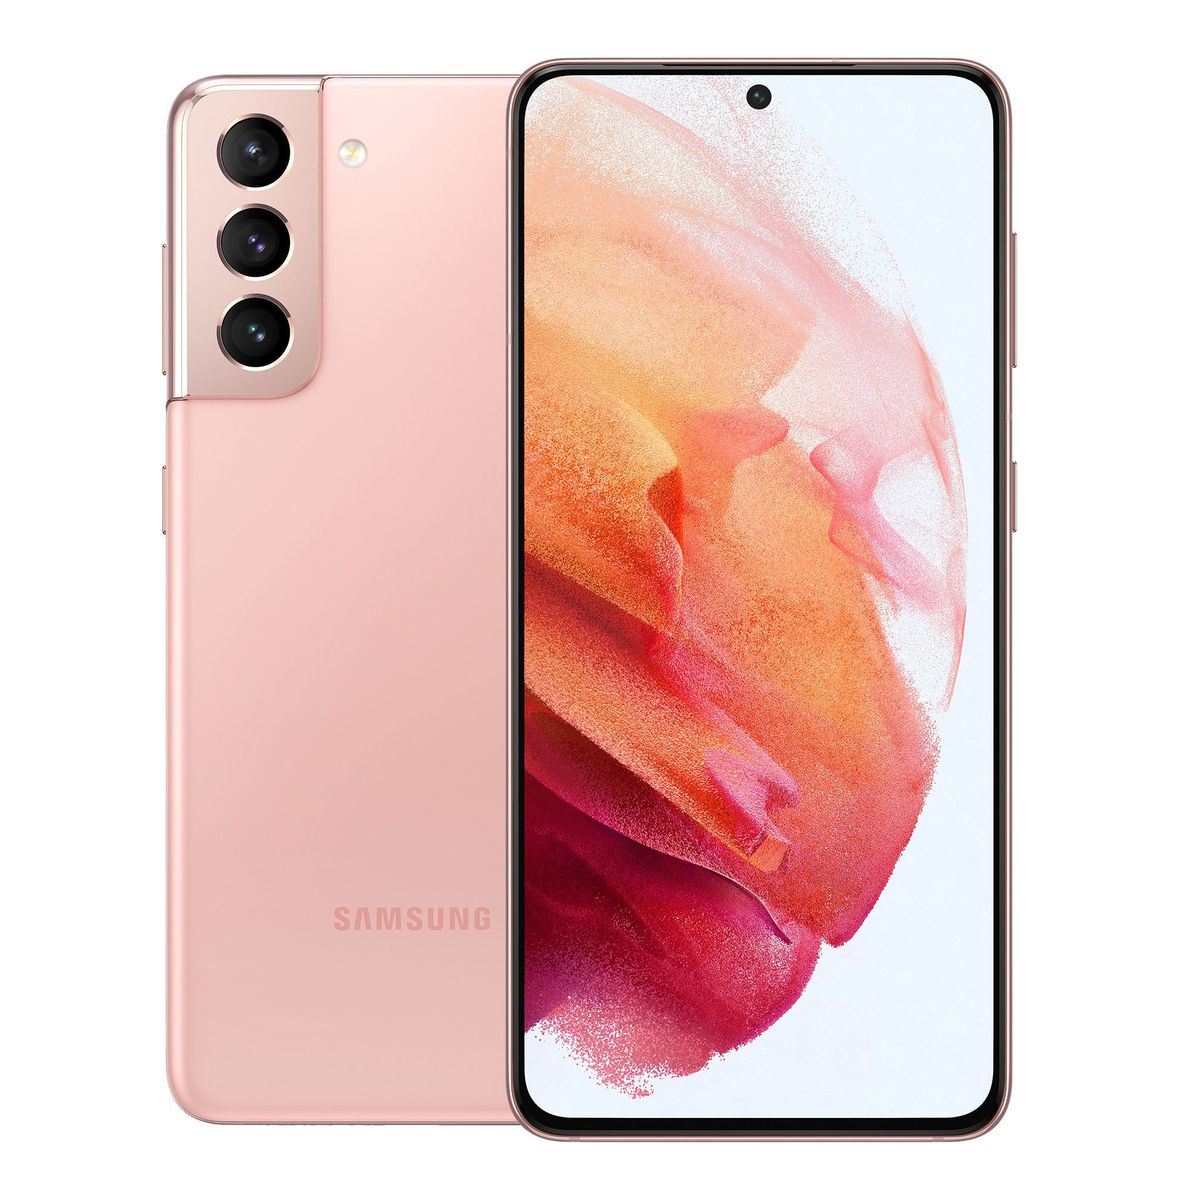 Samsung Galaxy S21 Smartphone 5G 128GB/8GB Phantom Pink